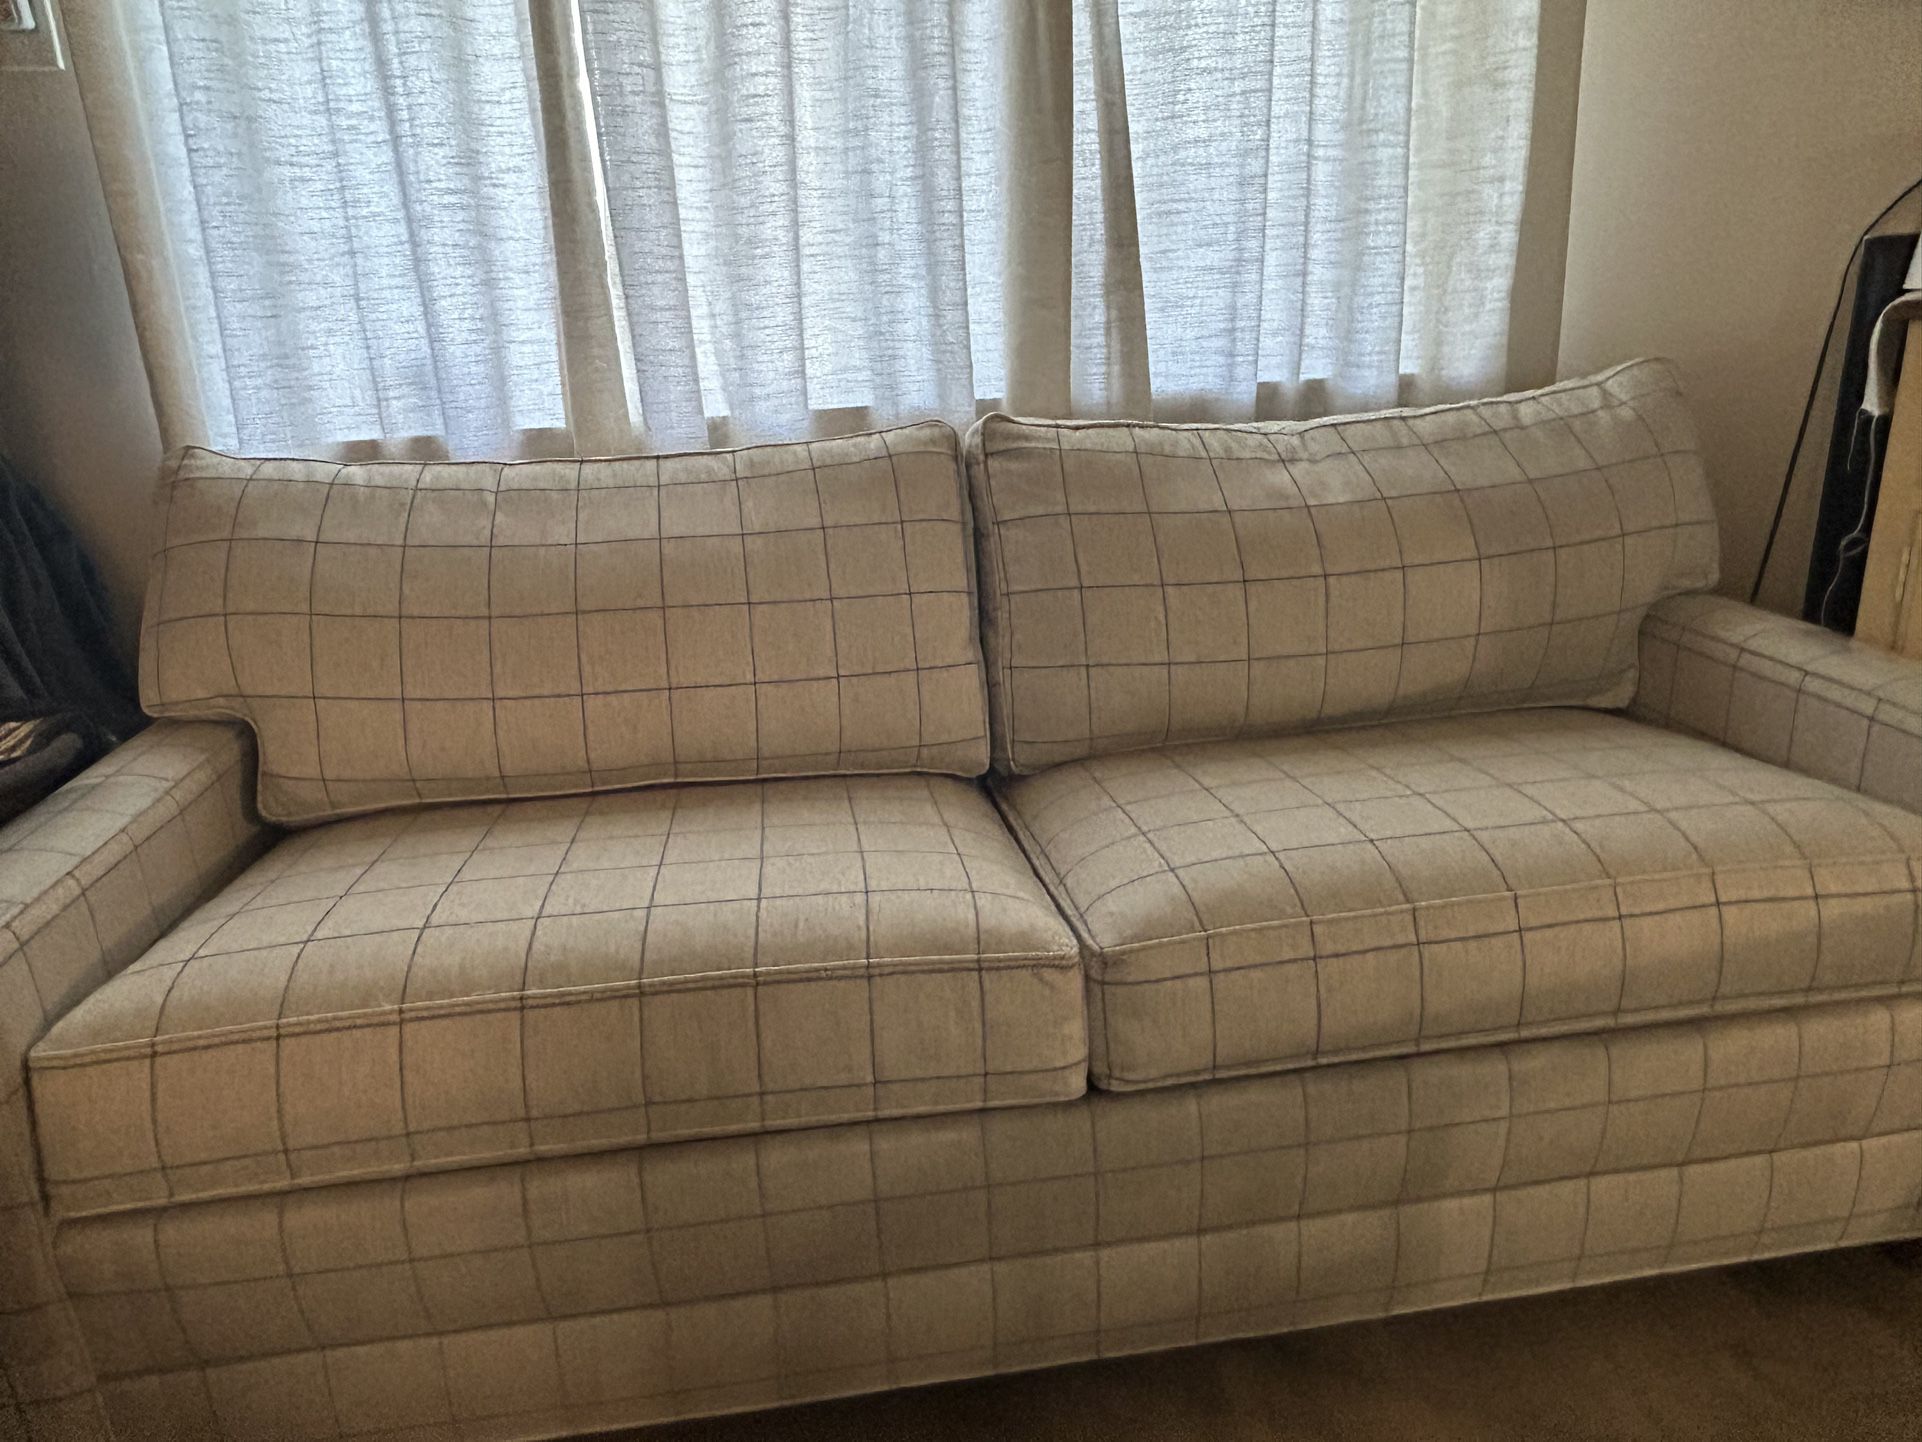 Brand New Ethan Allen Queen Sleeper Sofa- Never Used!